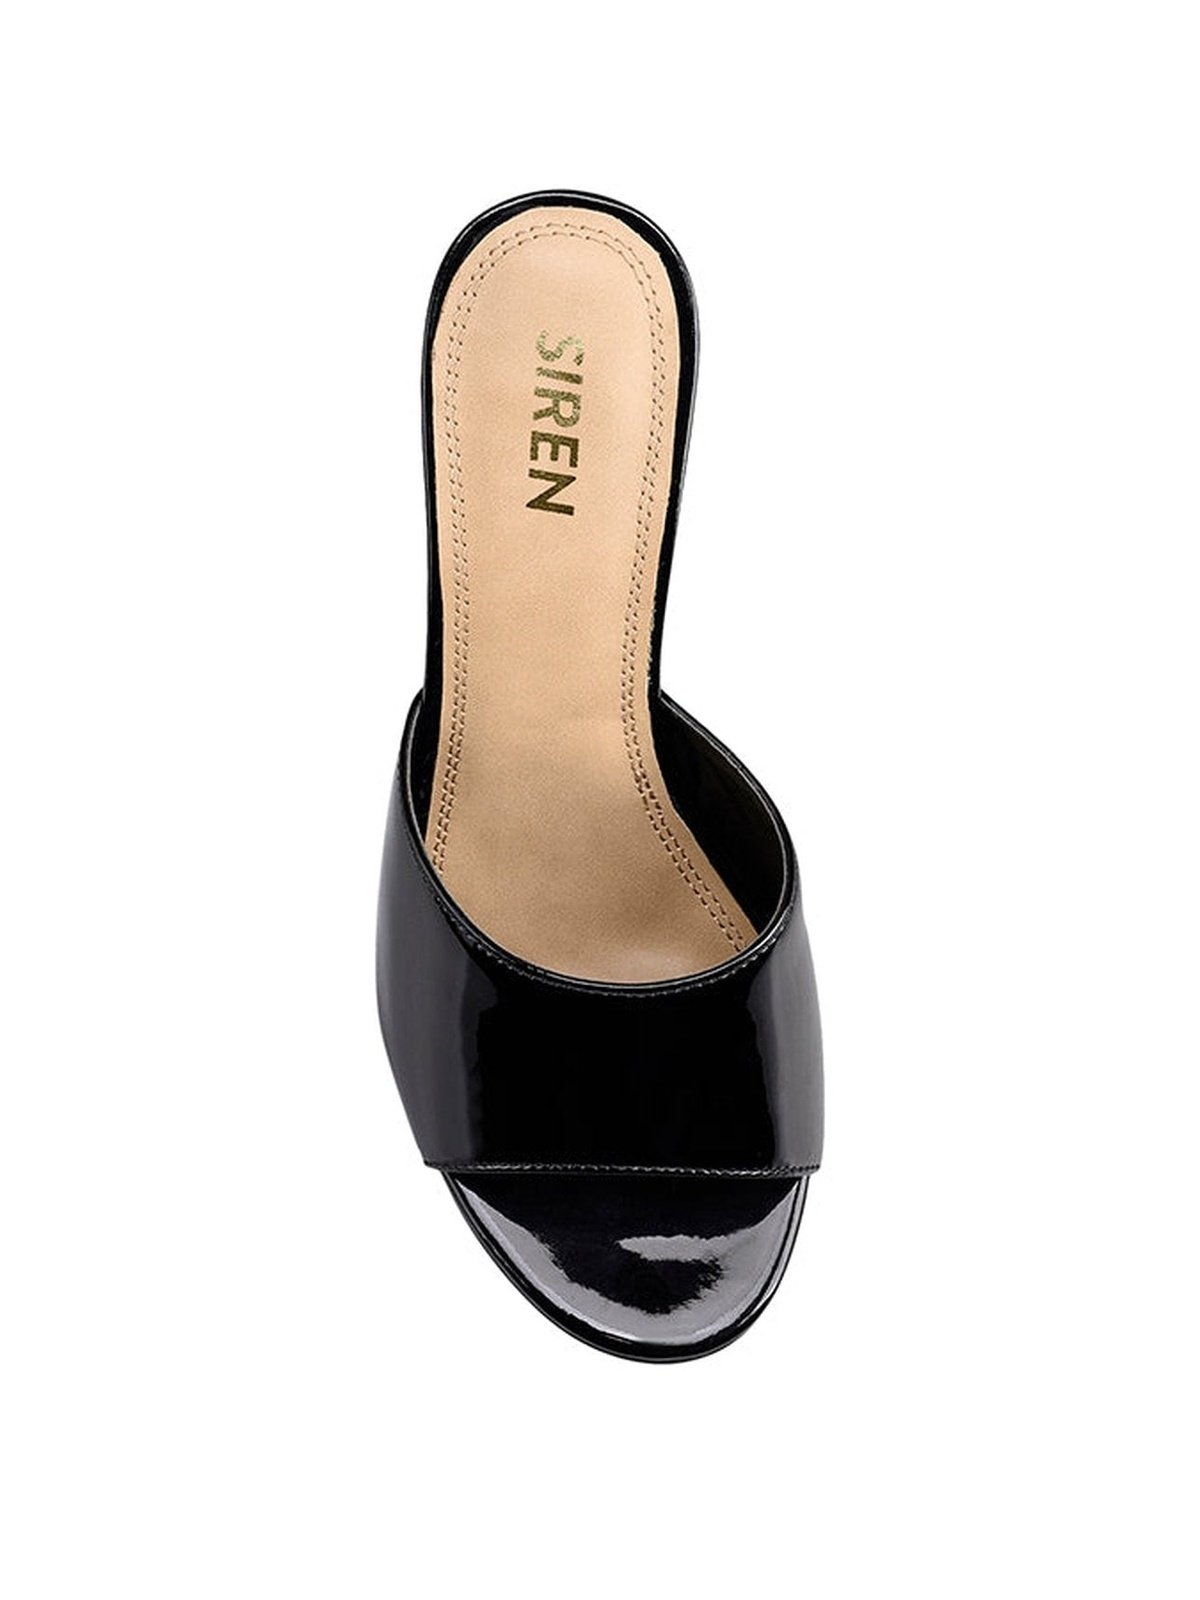 Bear Clear Wedge Heels Black Patent | Siren Shoes